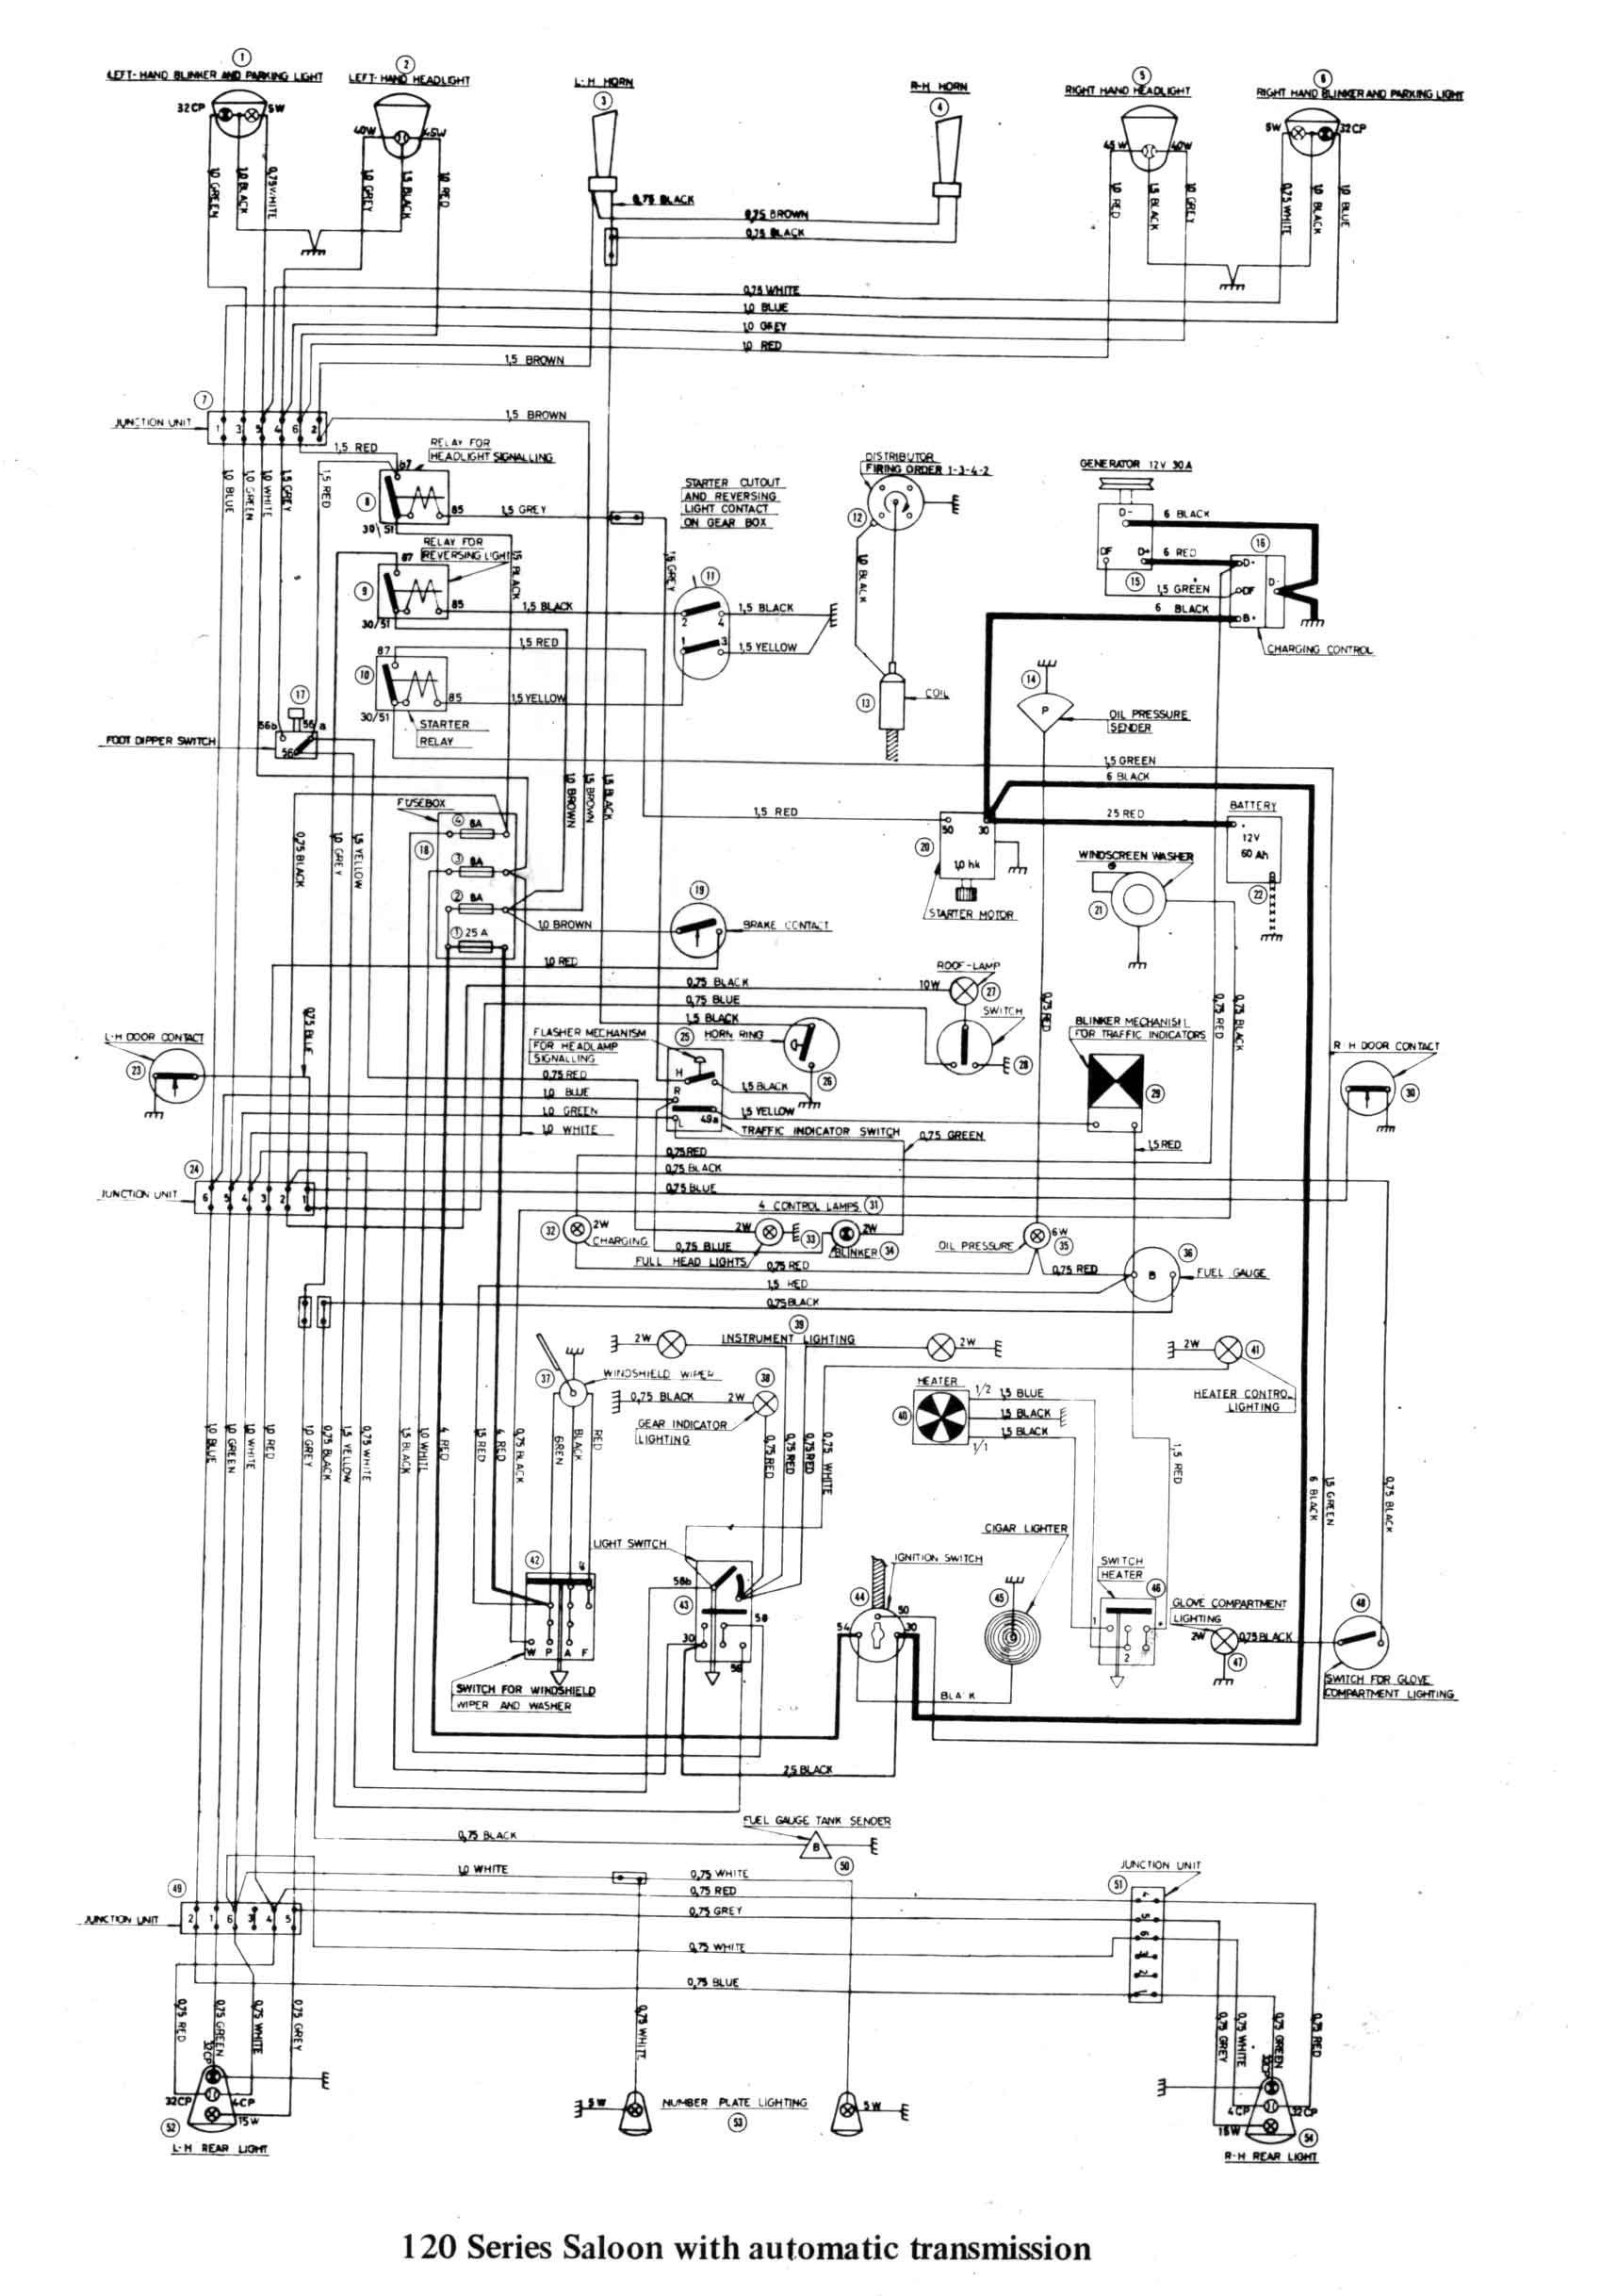 Ingersoll Rand Club Car Wiring Diagram 36 Volt Ez Go Golf Cart Wiring Diagram Rate Wiring Diagram for Ezgo Of Ingersoll Rand Club Car Wiring Diagram